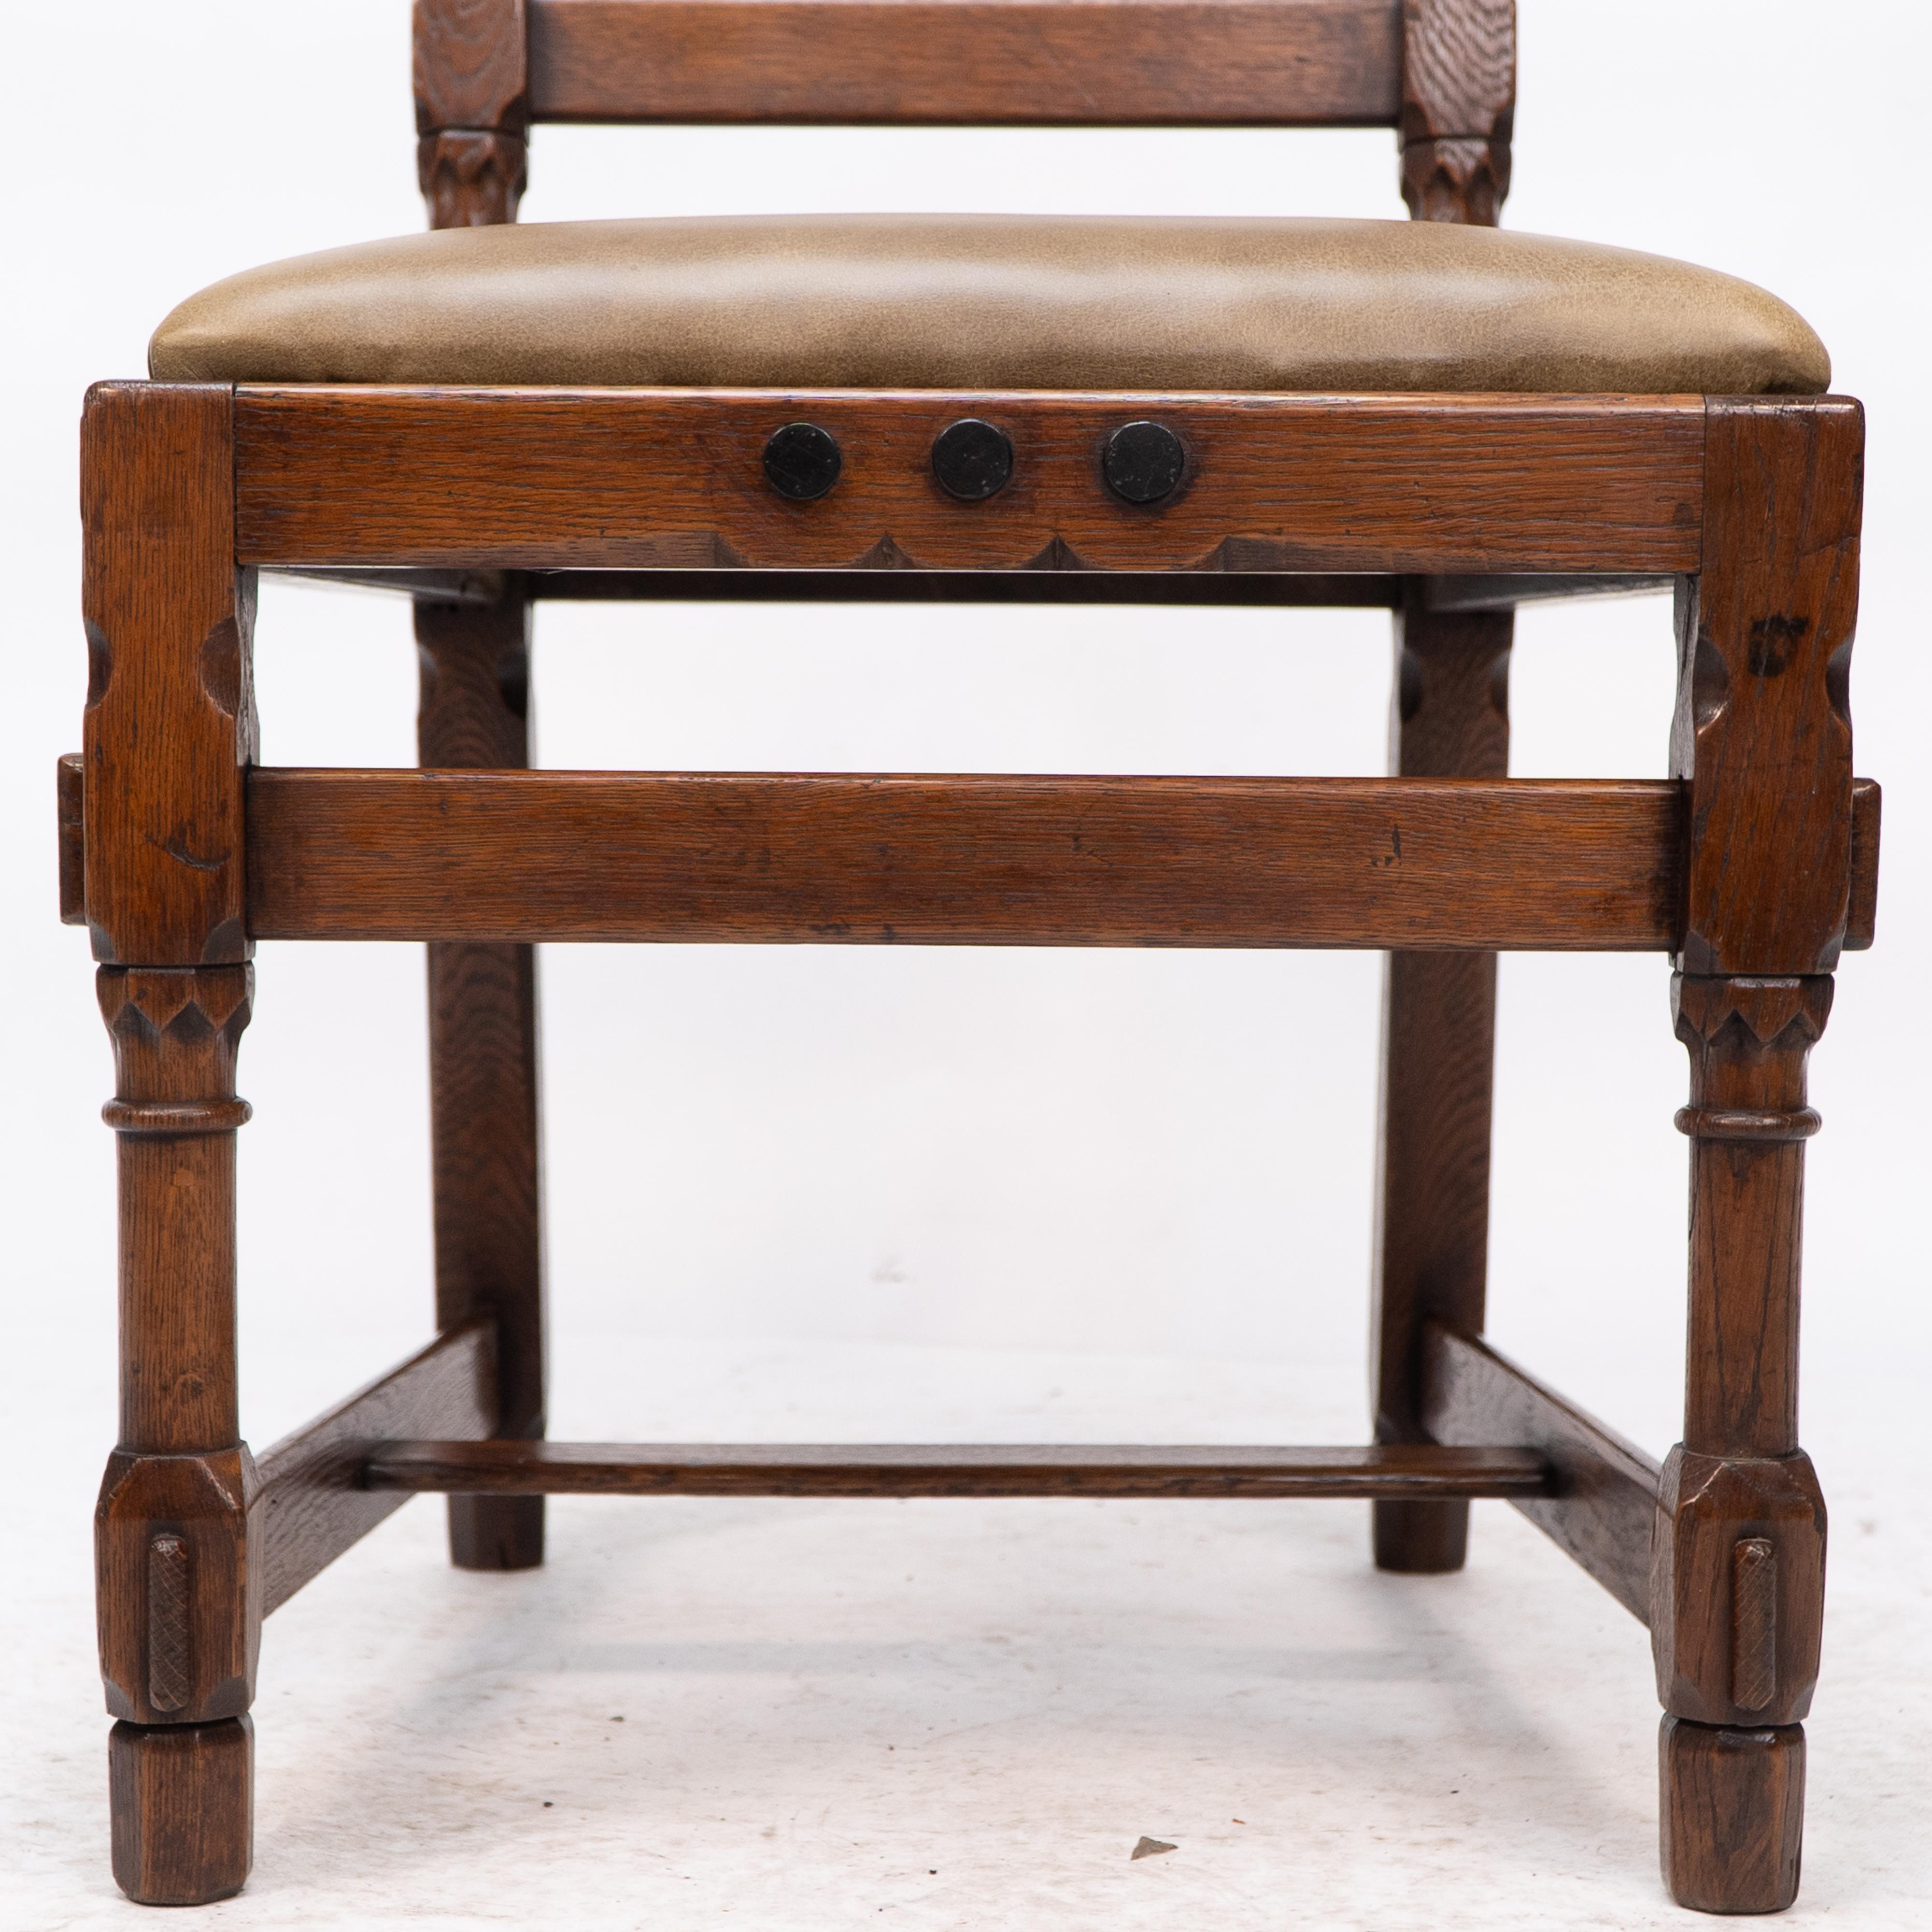 J P Seddon attri. An Aesthetic Movement oak side chair with ebonized circles For Sale 6